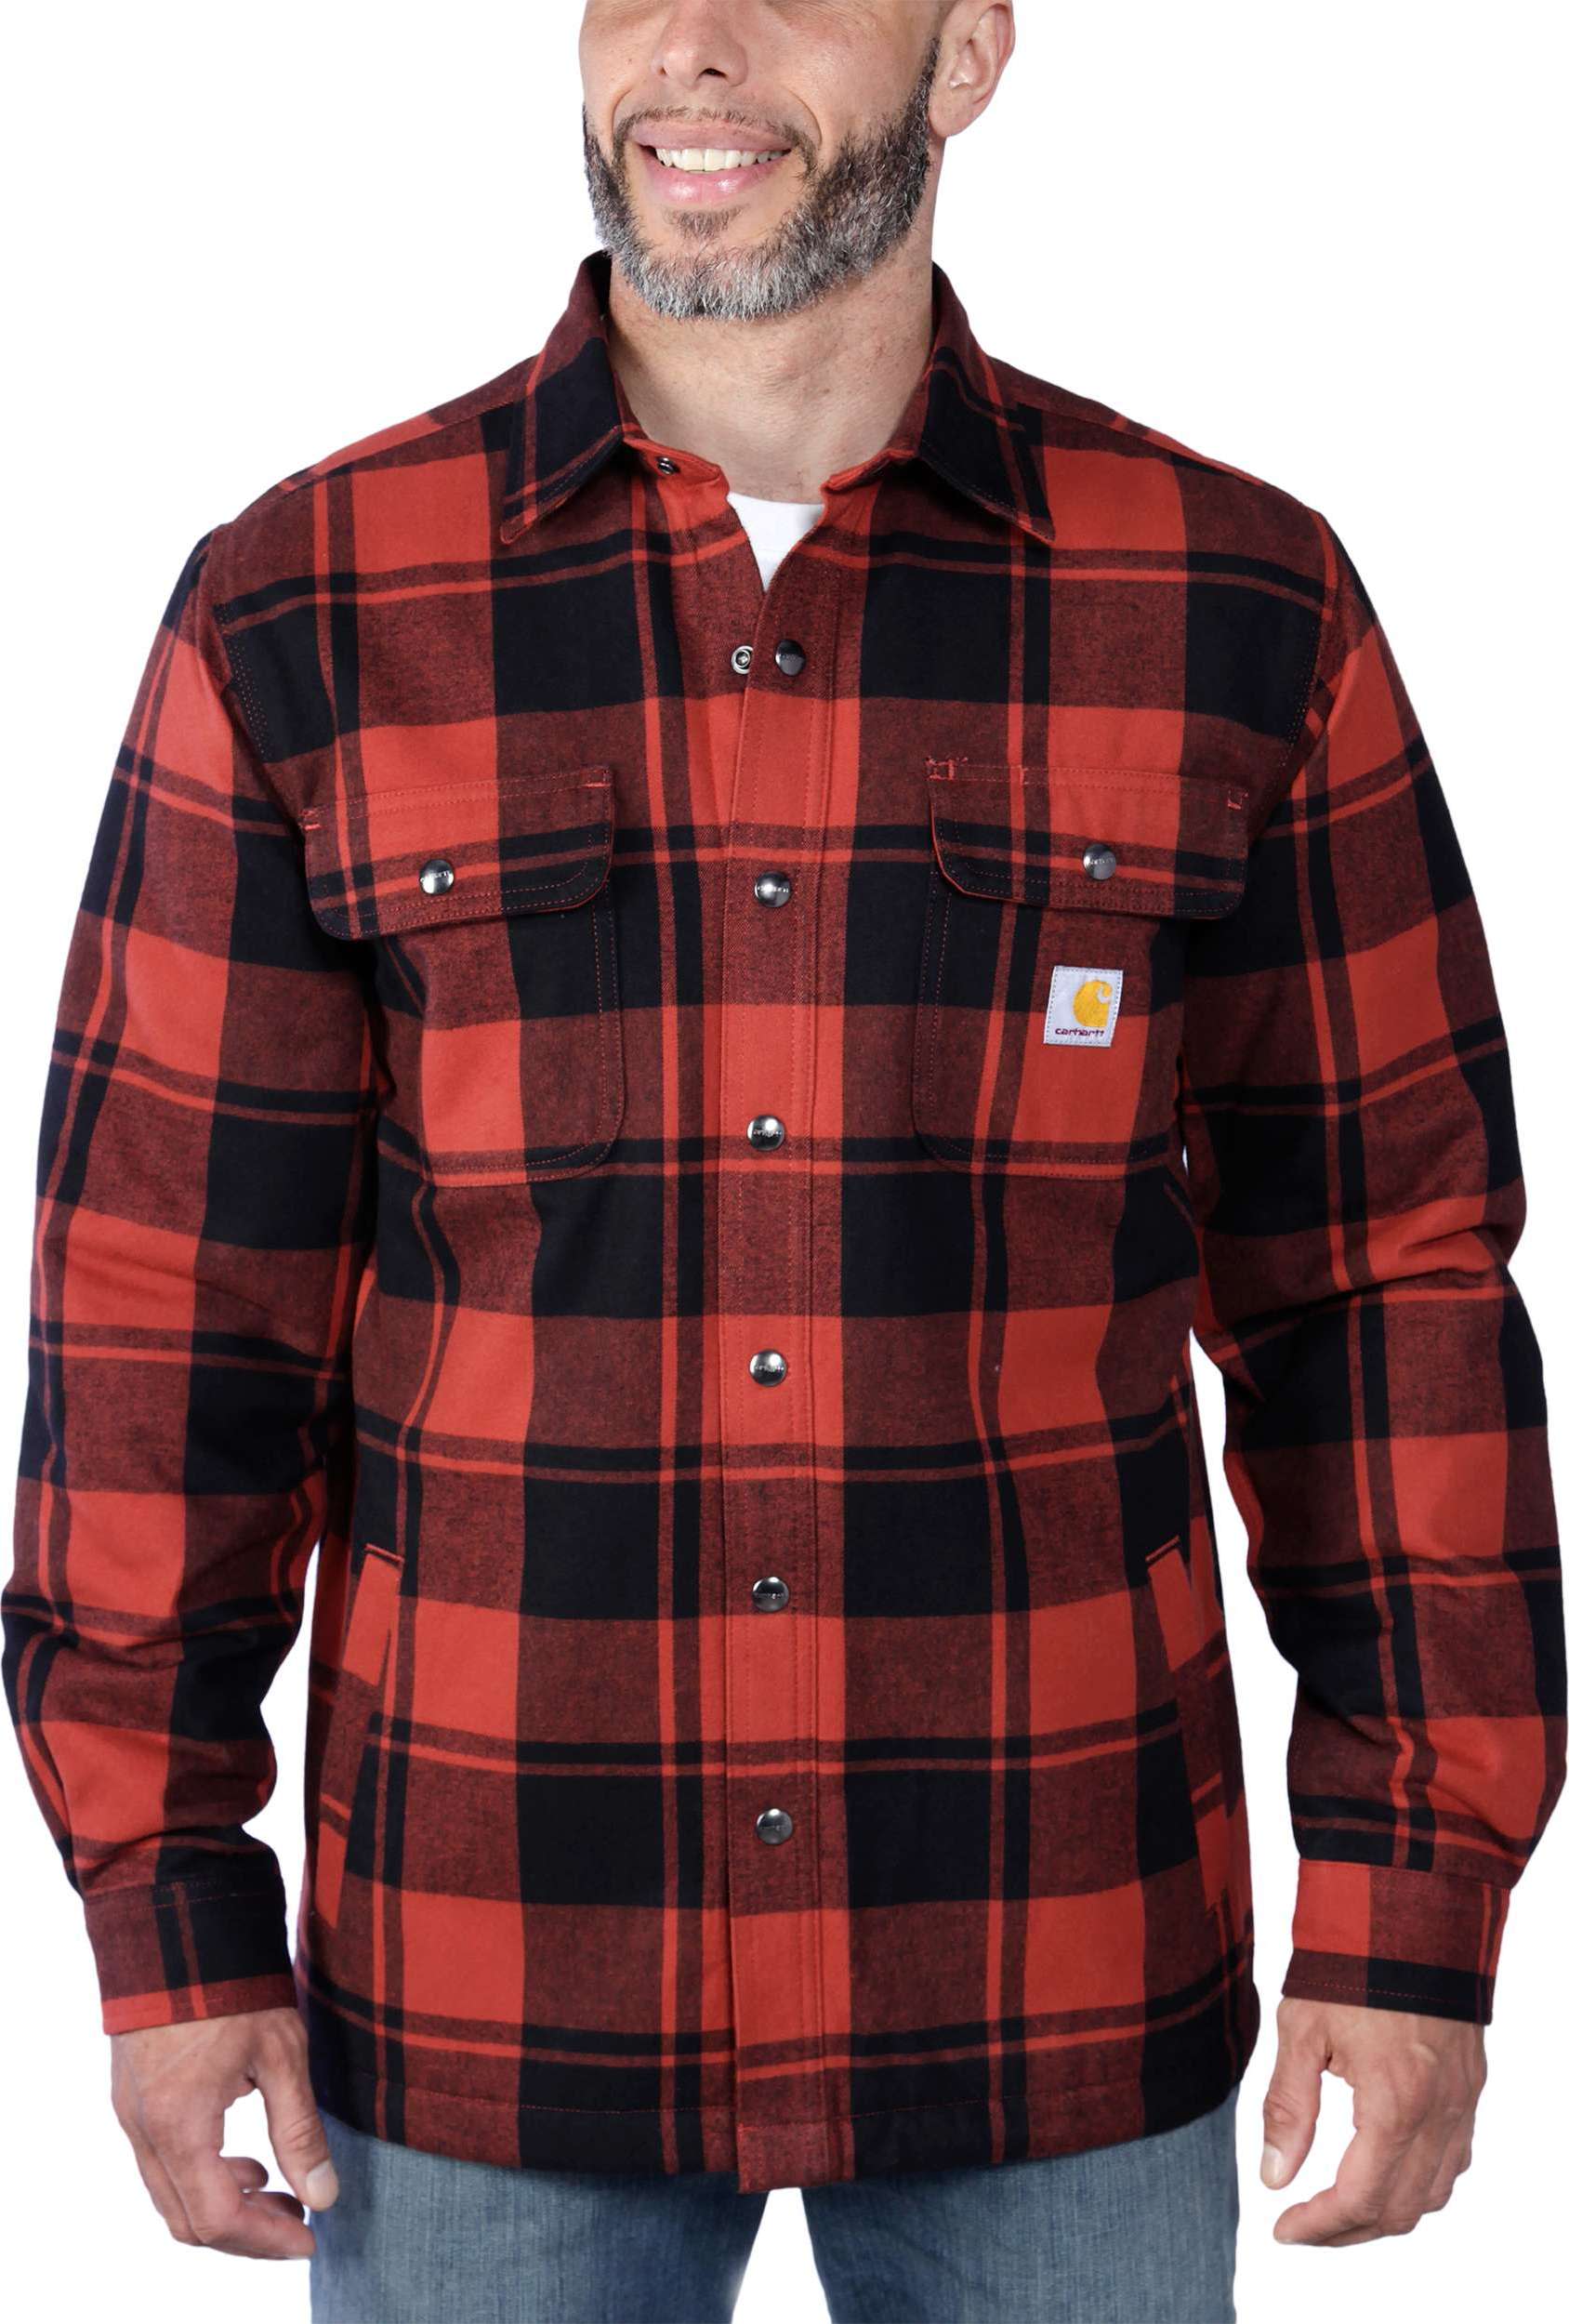 Carhartt Carhartt Men's Flannel Sherpa Lined Shirt Jacket Red Ochre M, Red Ochre